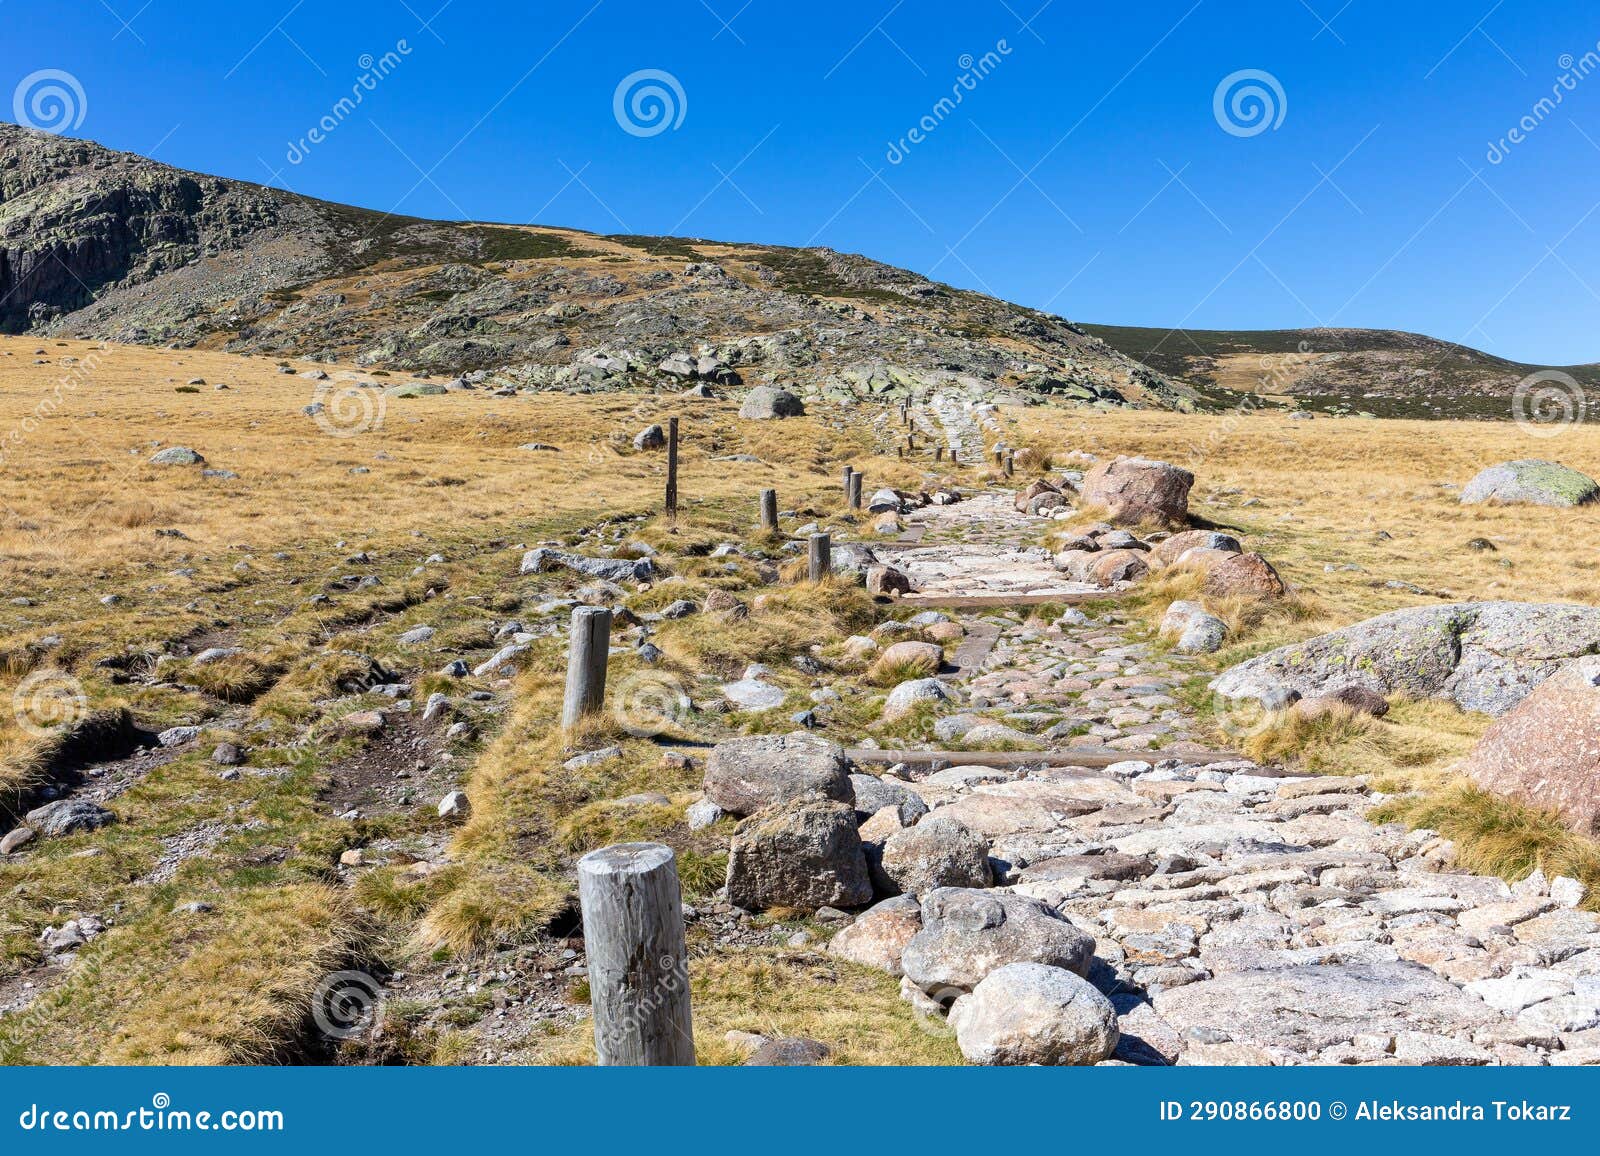 stone hiking trail to the laguna grande de gredos, sierra de gredos mountains, spain